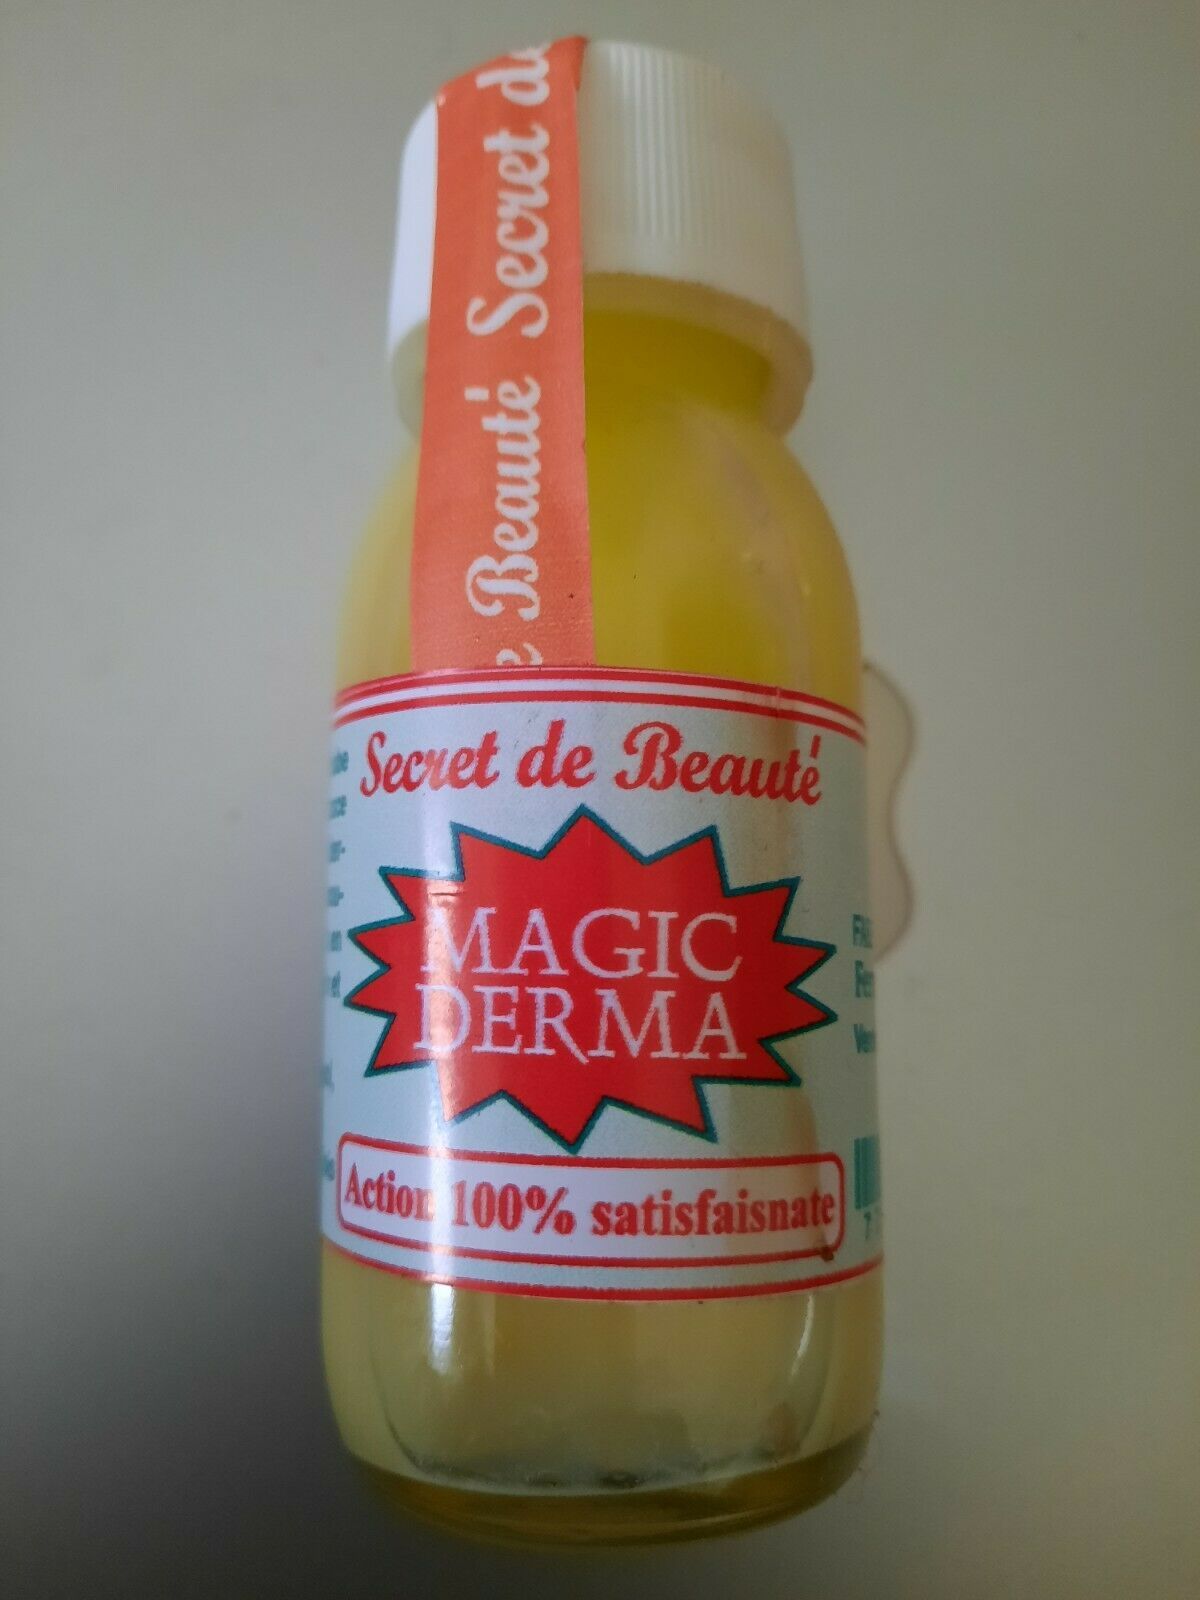 Magic Derma lightening serum - $22.67